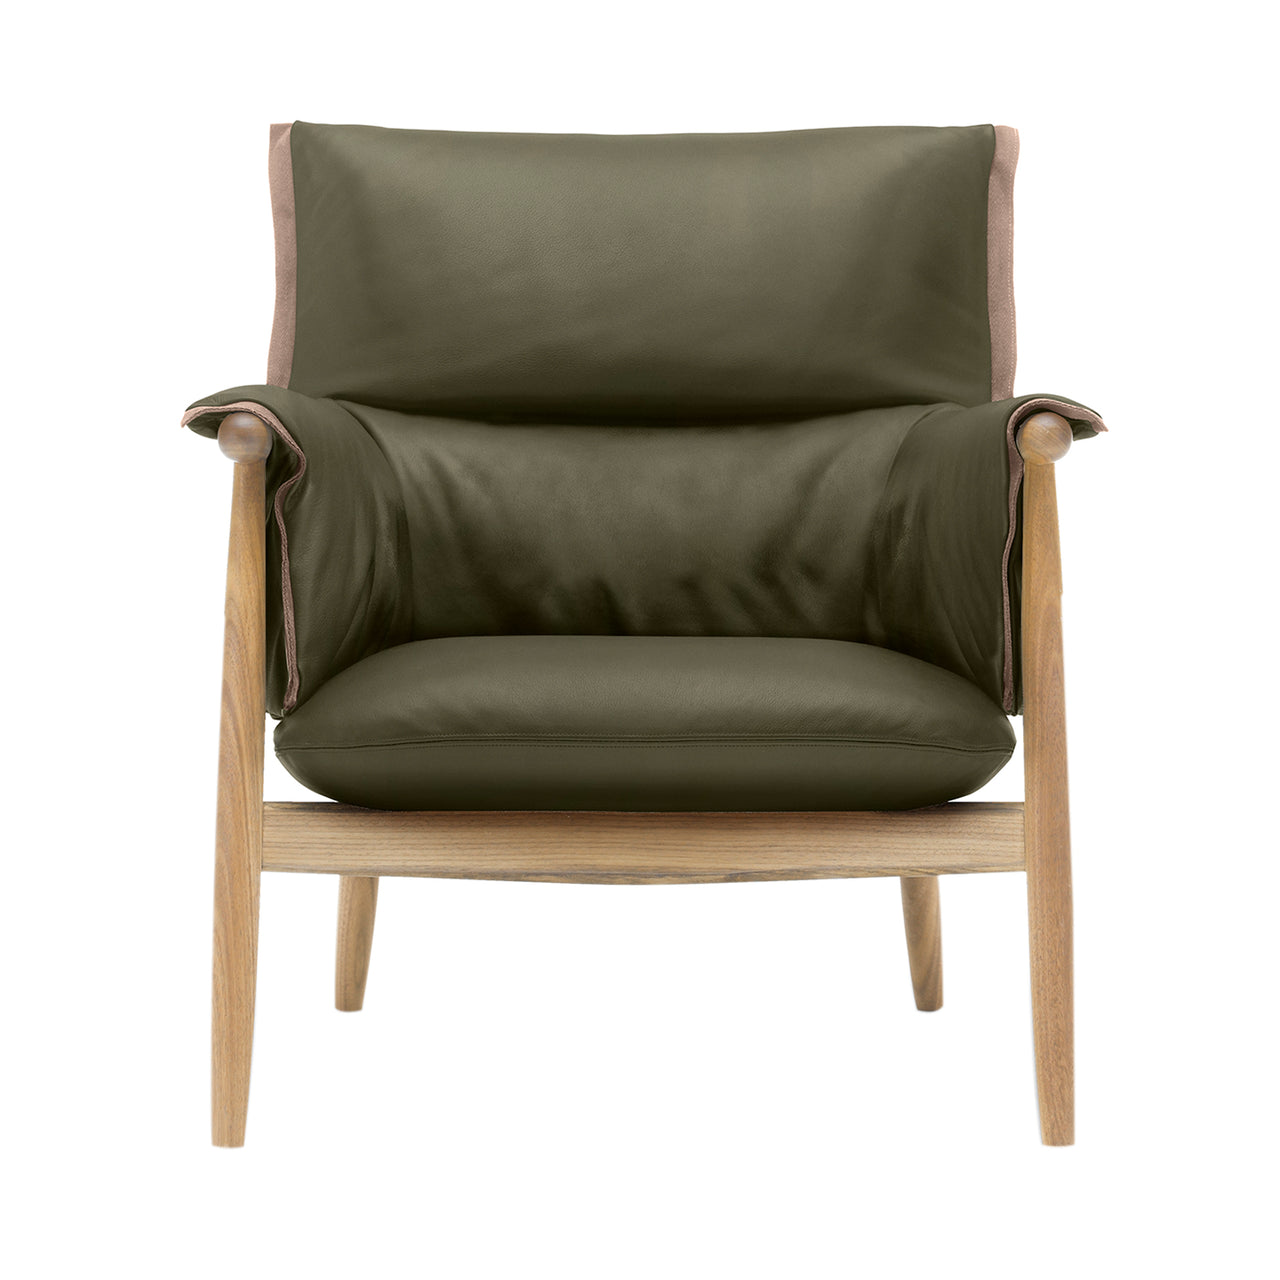 E015 Embrace Lounge Chair: Natural Edging Strip + Soaped Oak